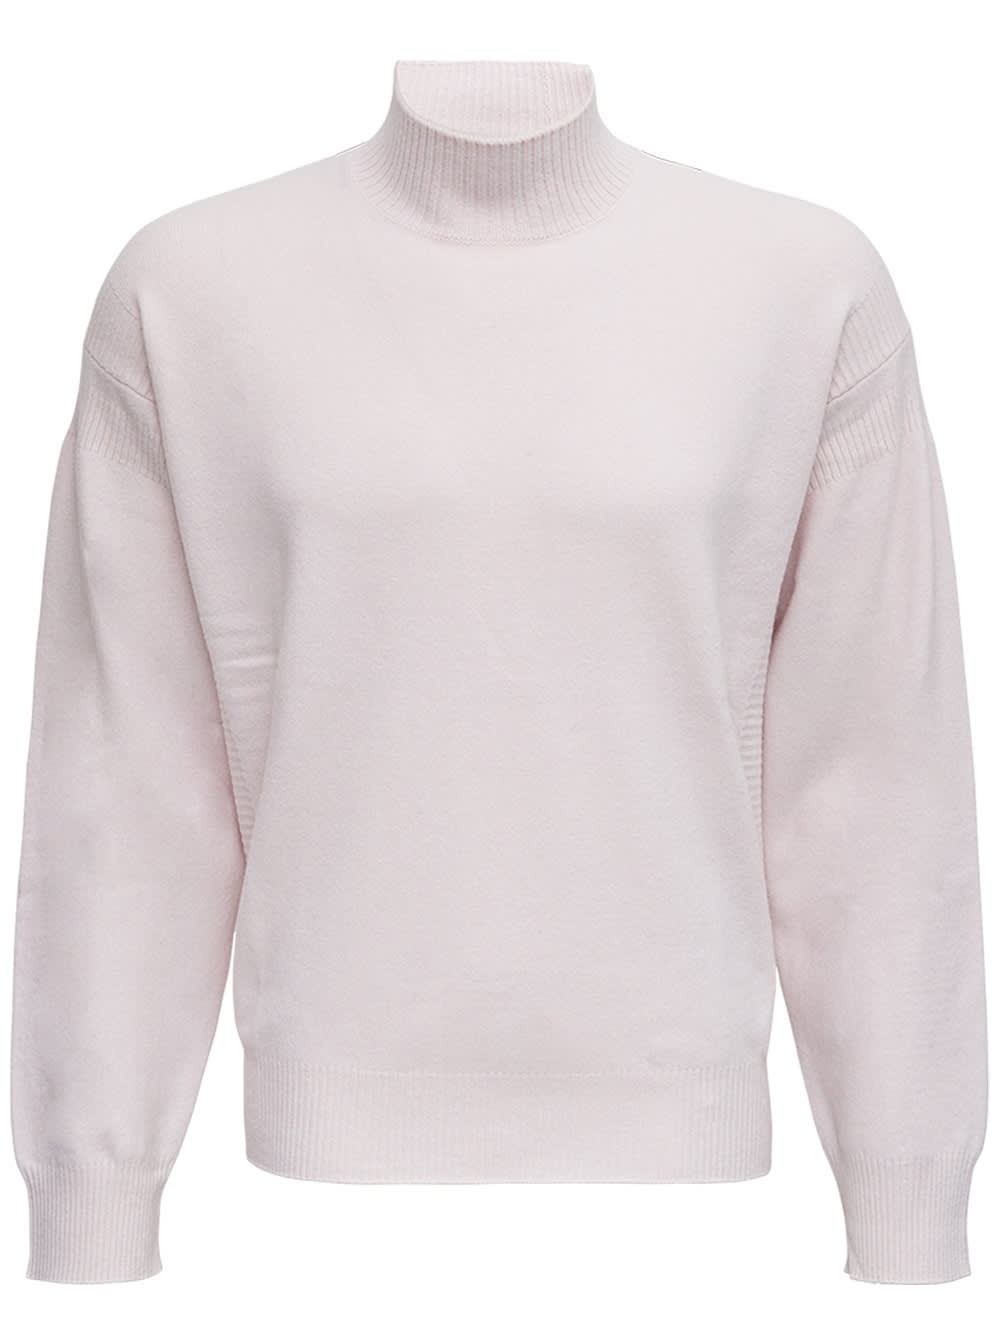 Z Zegna White Wool Blend Sweater